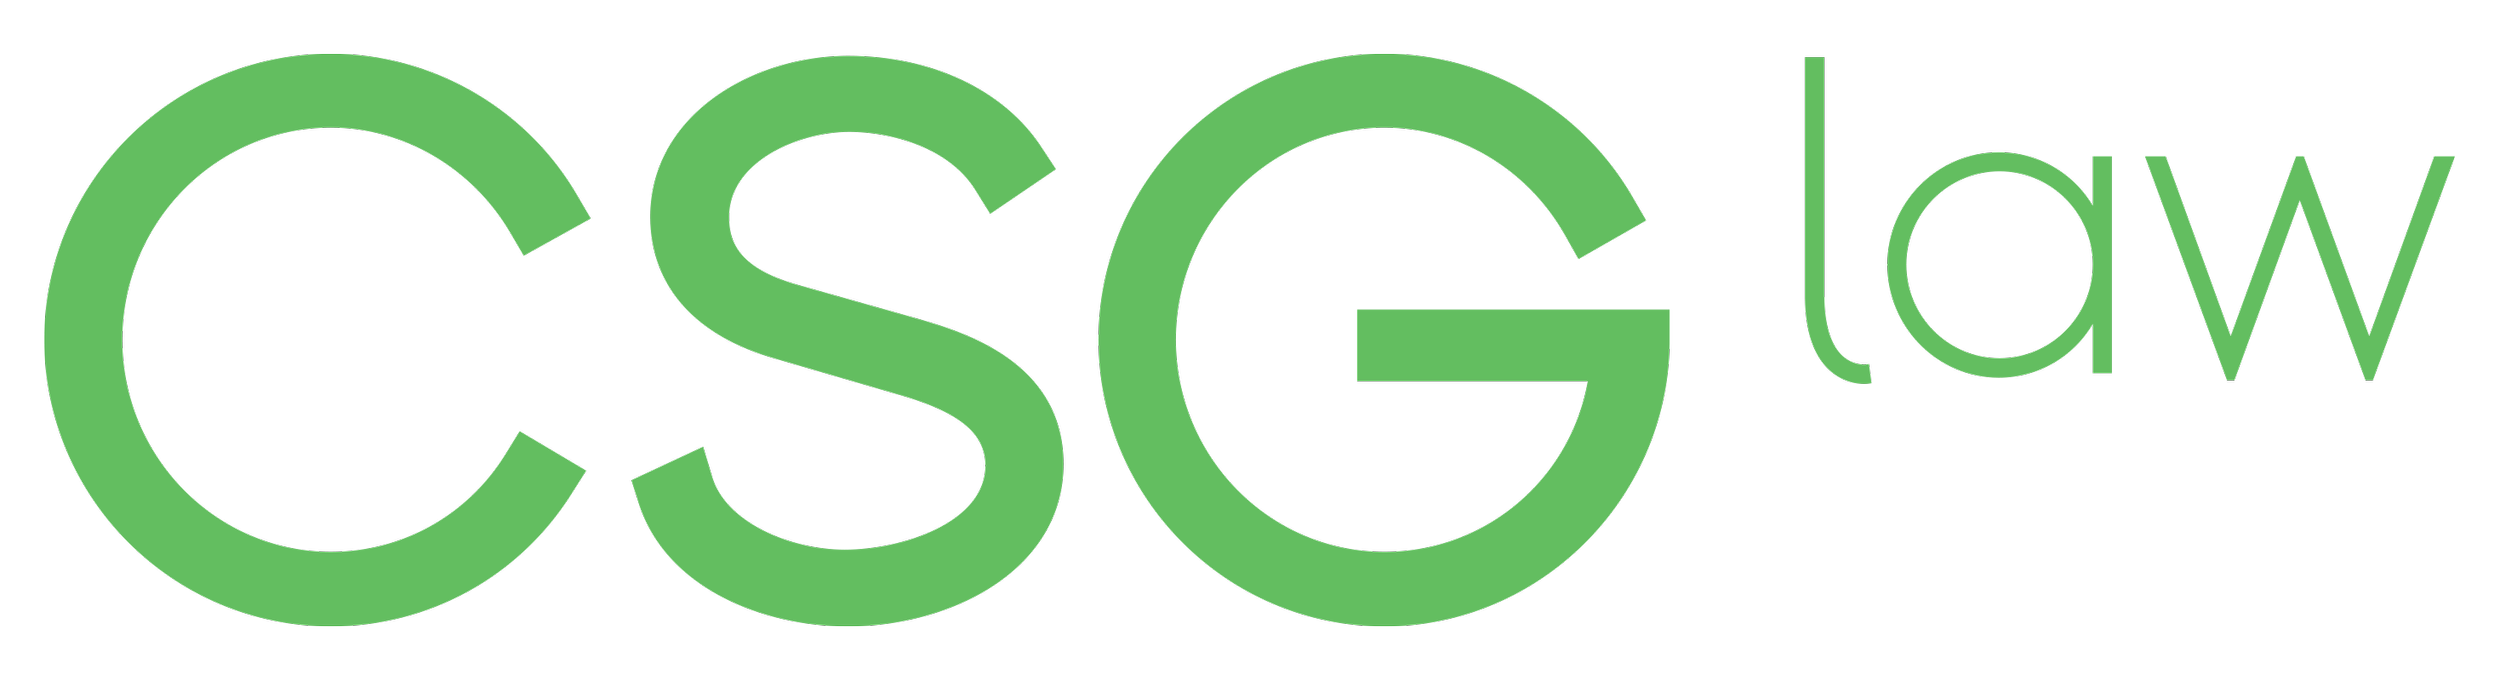 Chiesa-Shahinian-Giantomasi-PC-logo-rgb-green-black-web.png